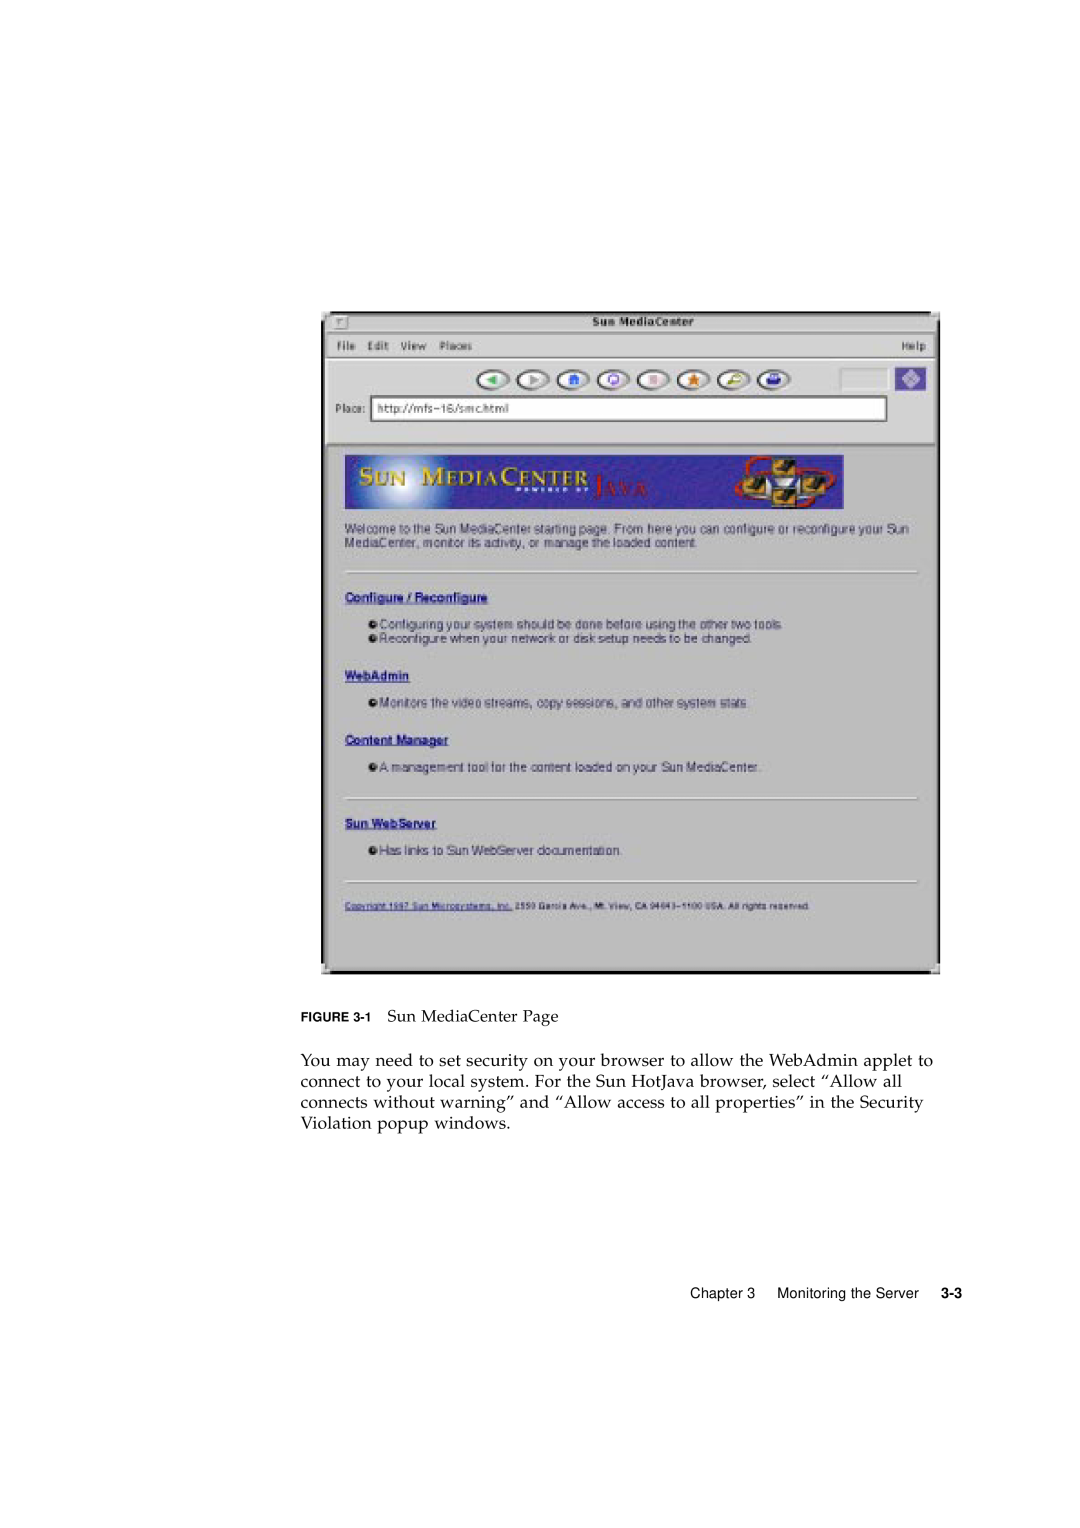 Sun Microsystems 2.1 manual 1 Sun MediaCenter Page, Monitoring the Server 